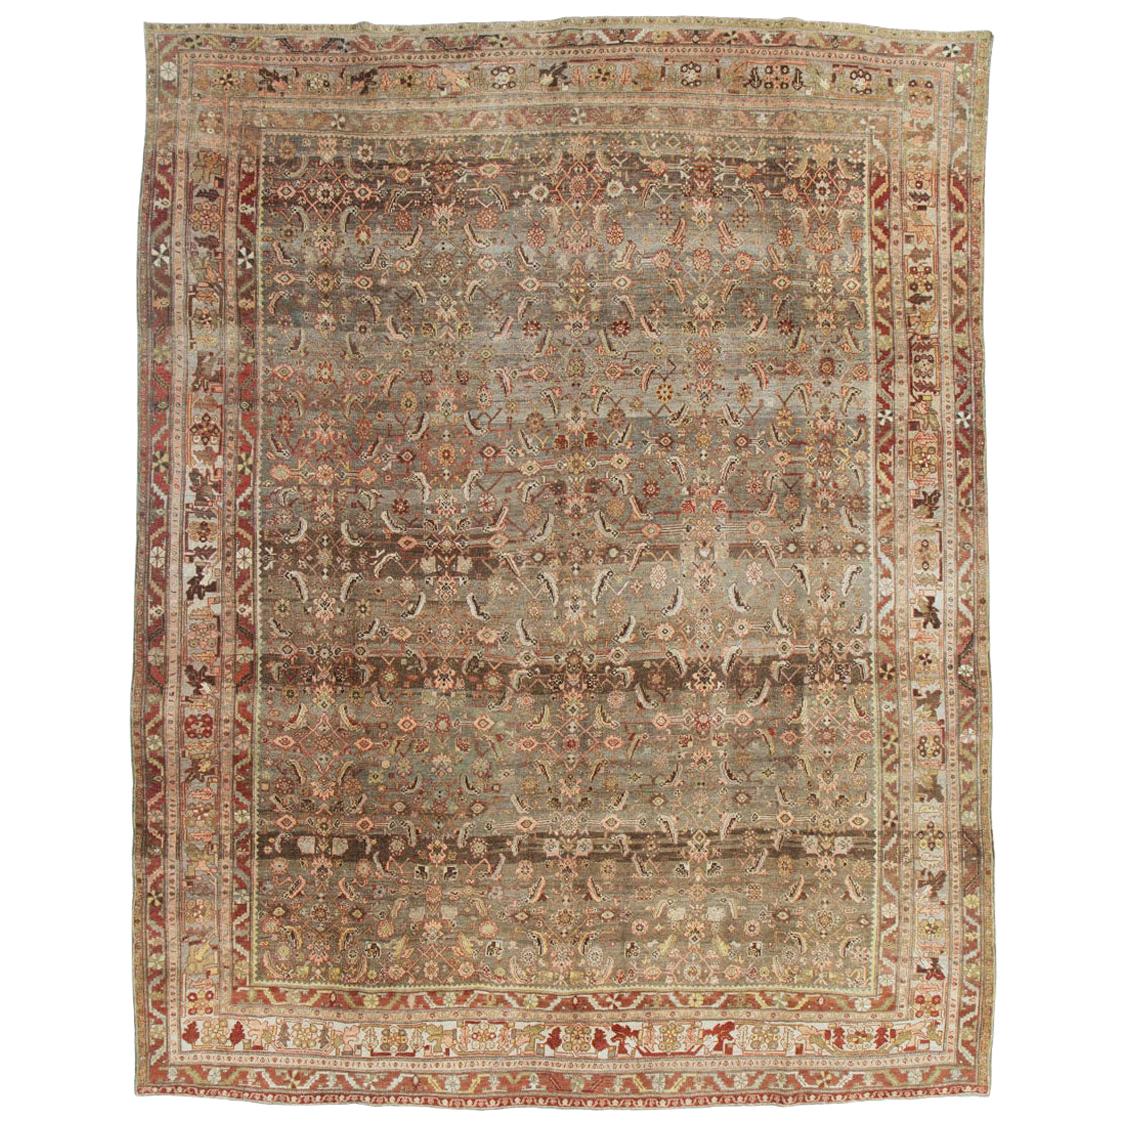 Rustic Early 20th Century Persian Bidjar Room Size Carpet in Earth Tones For Sale